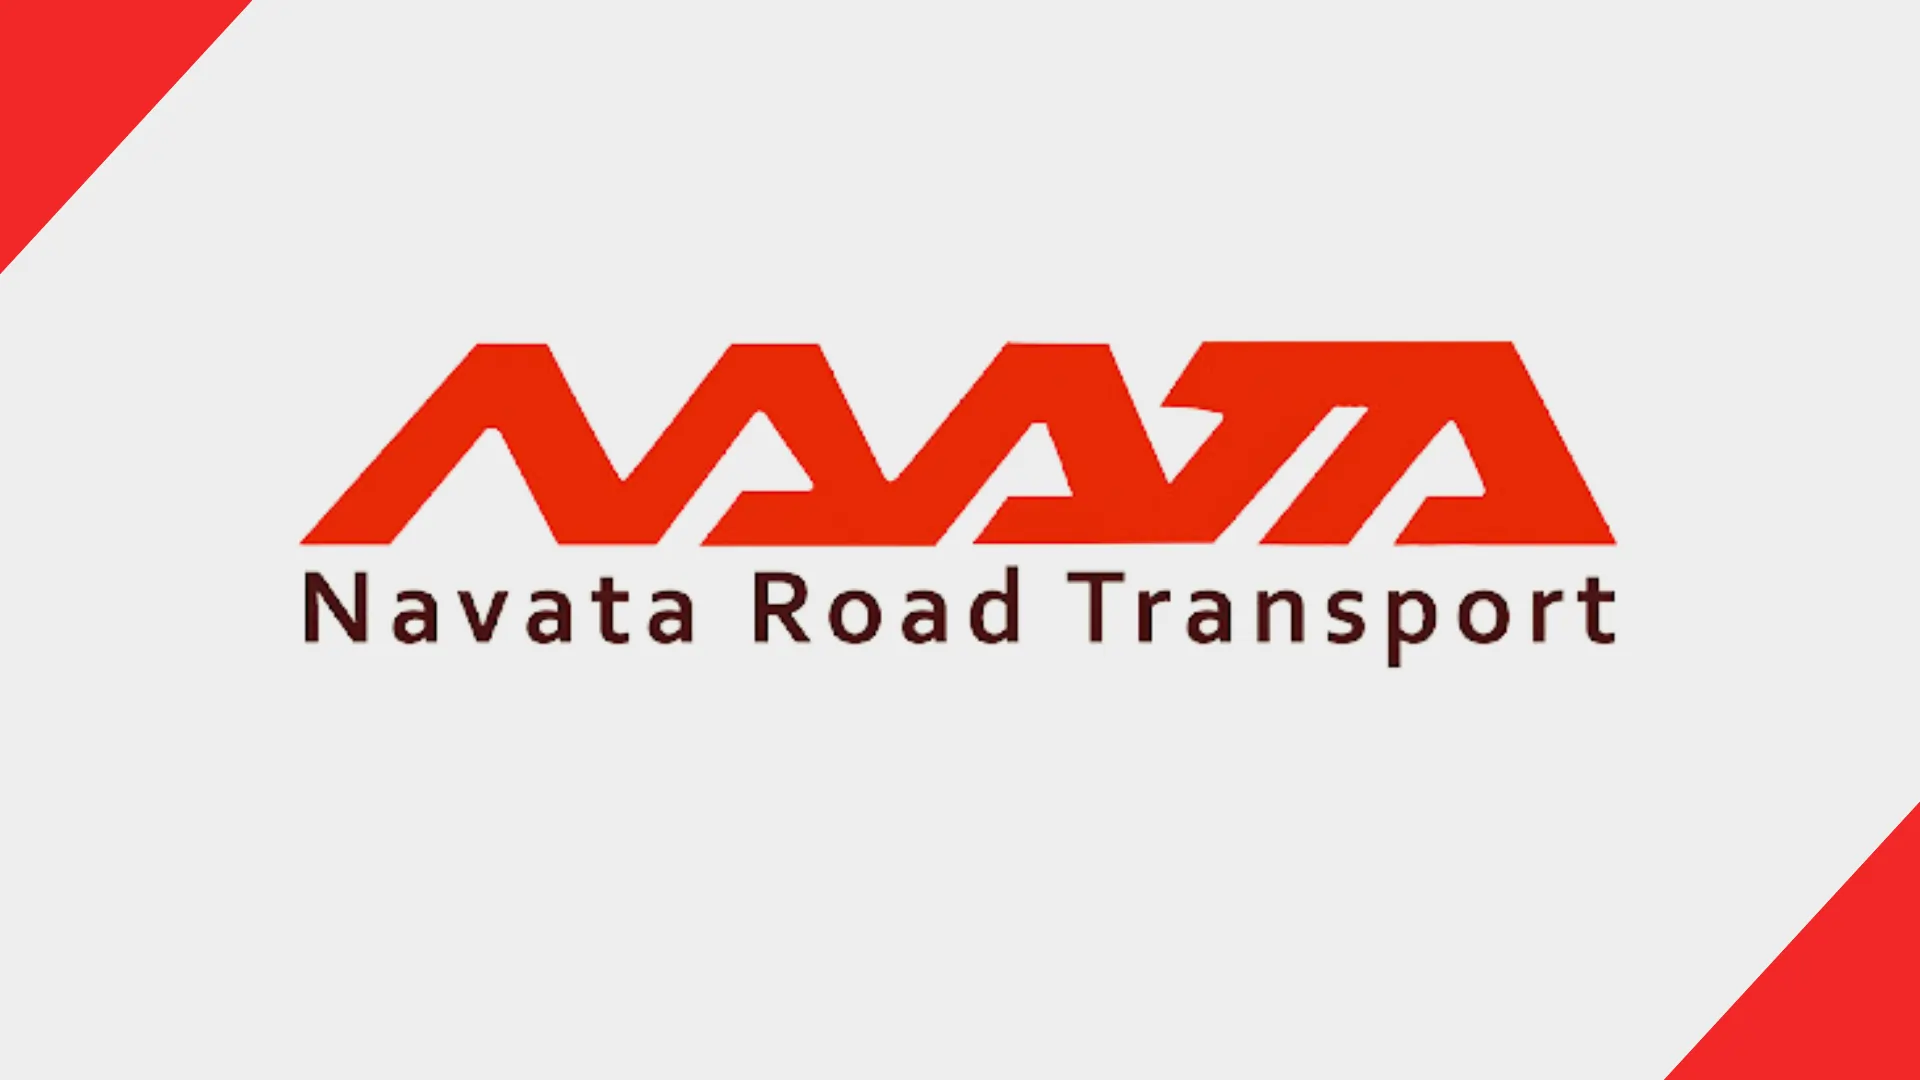 Transportation Companies in Hyderabad